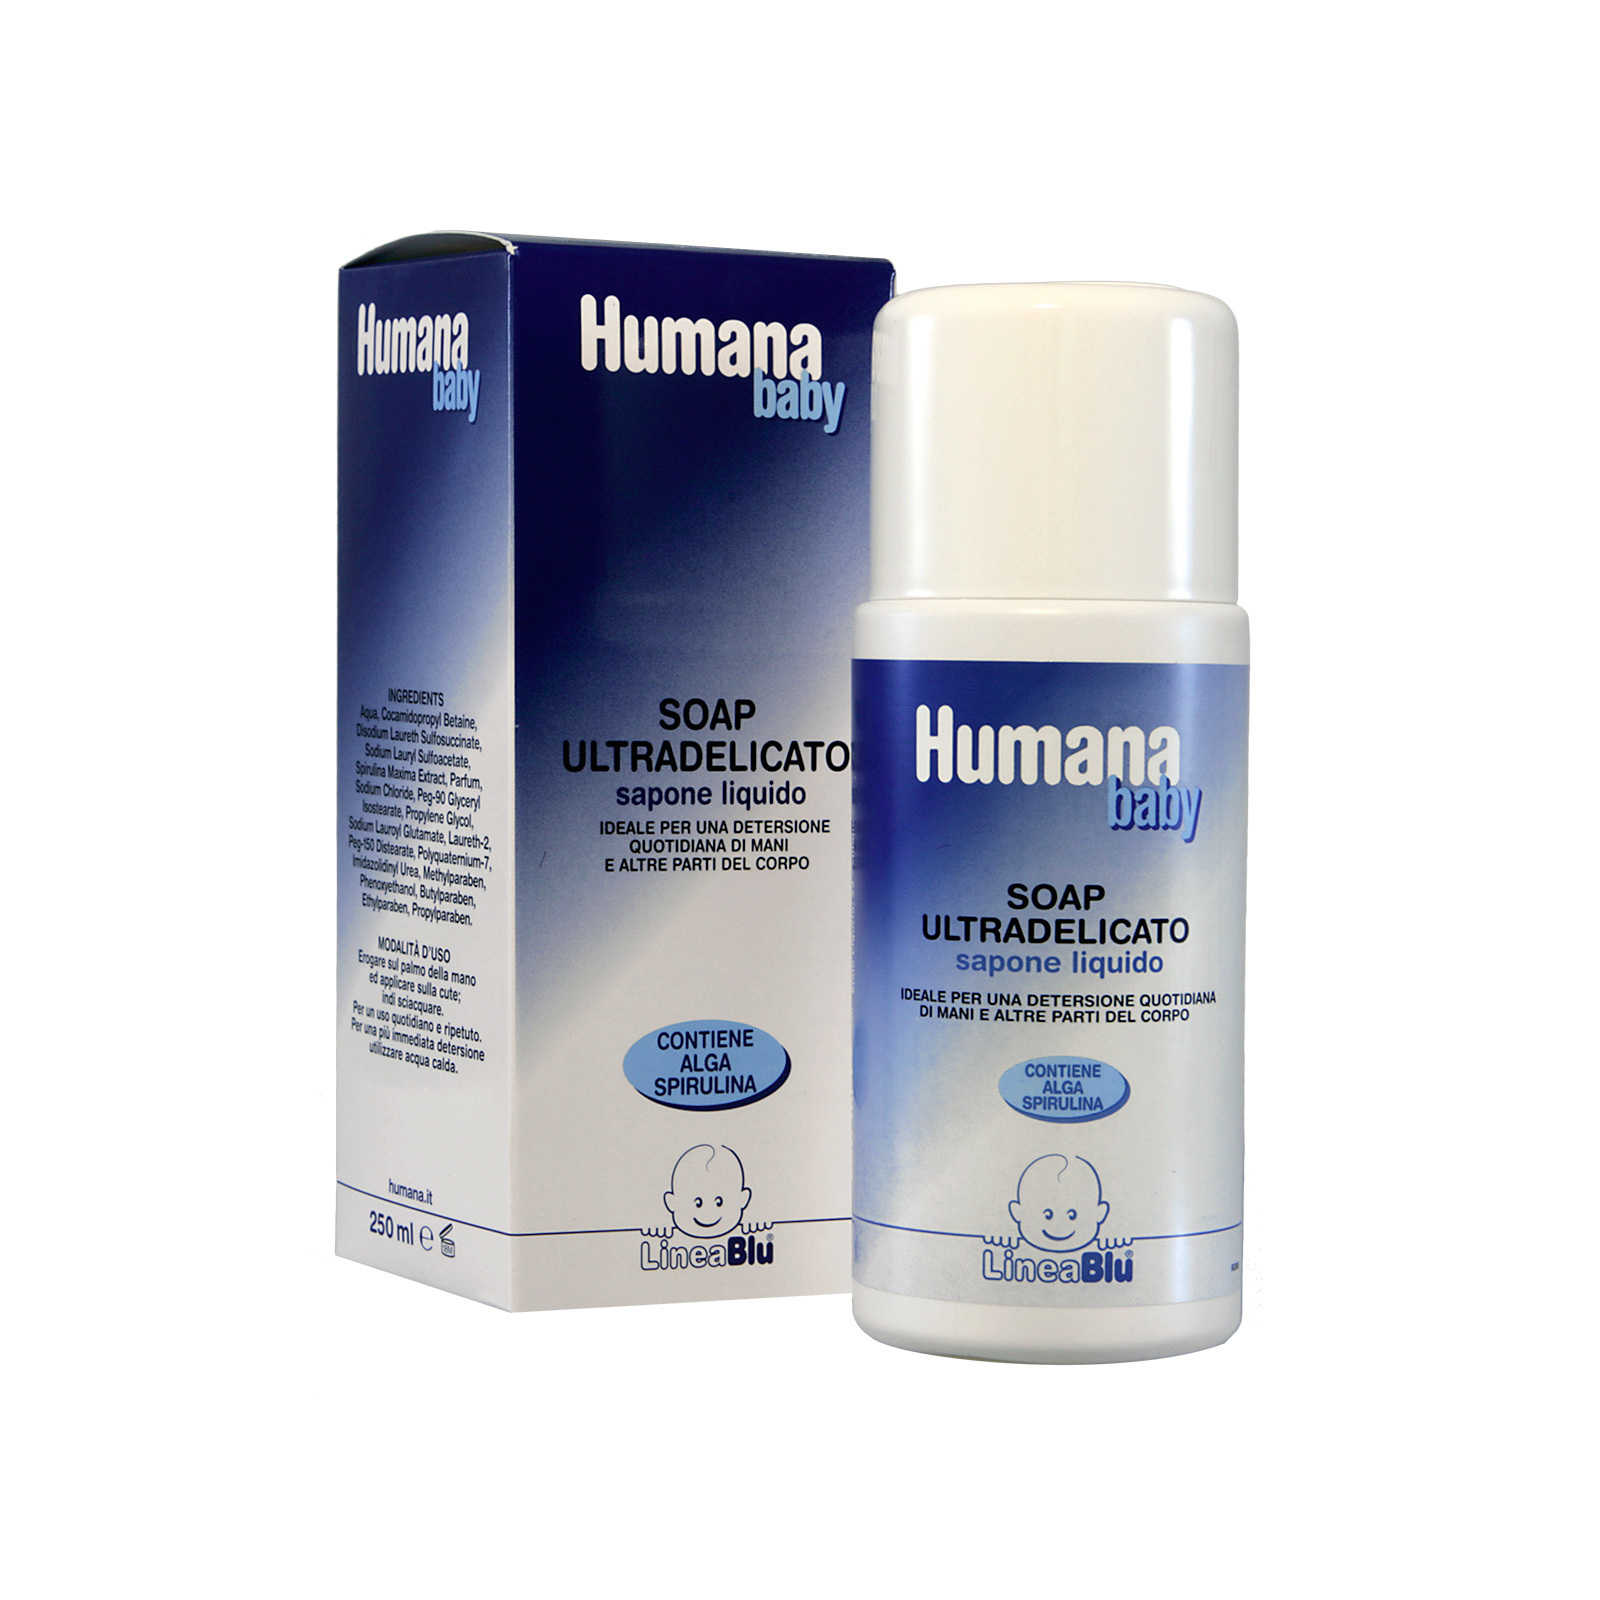 Humana - Baby - Soap Ultradelicato - 250ml - Sapone detergente